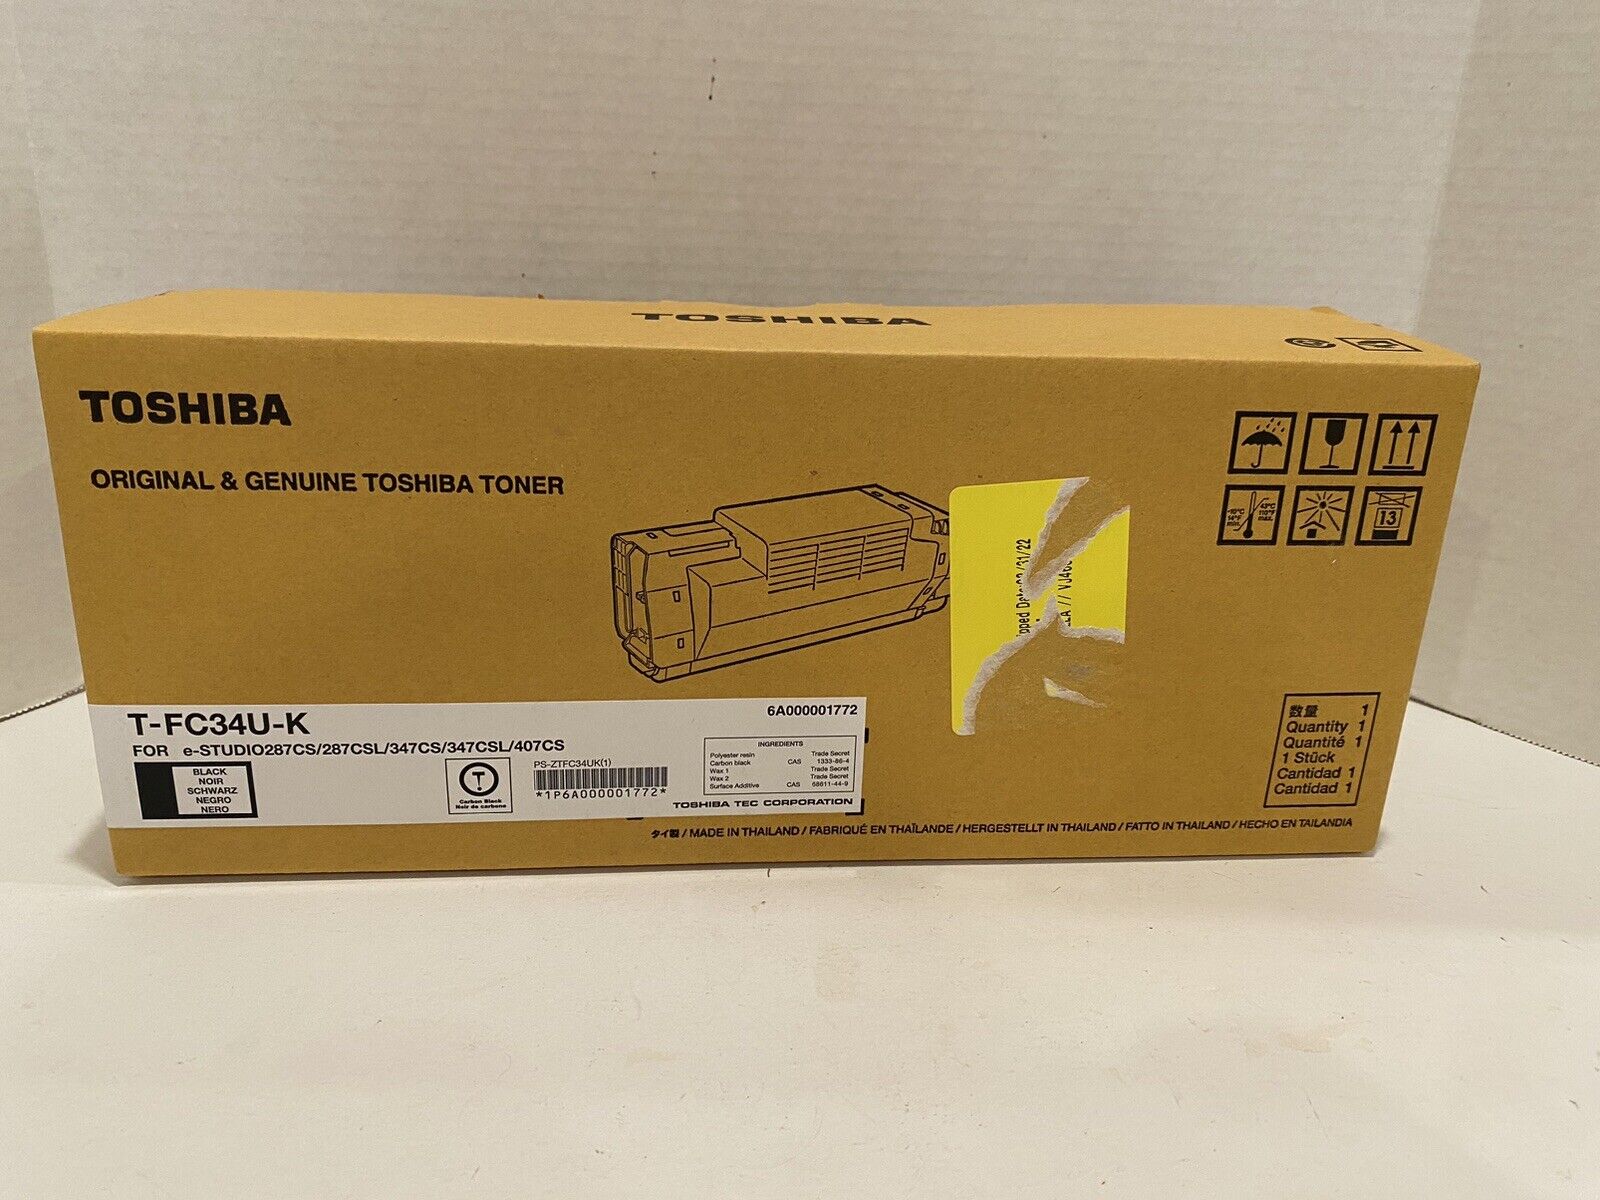 Genuine Toshiba T-FC34U-K Black Toner Cartridge Brand New In Box And Plastic Bag